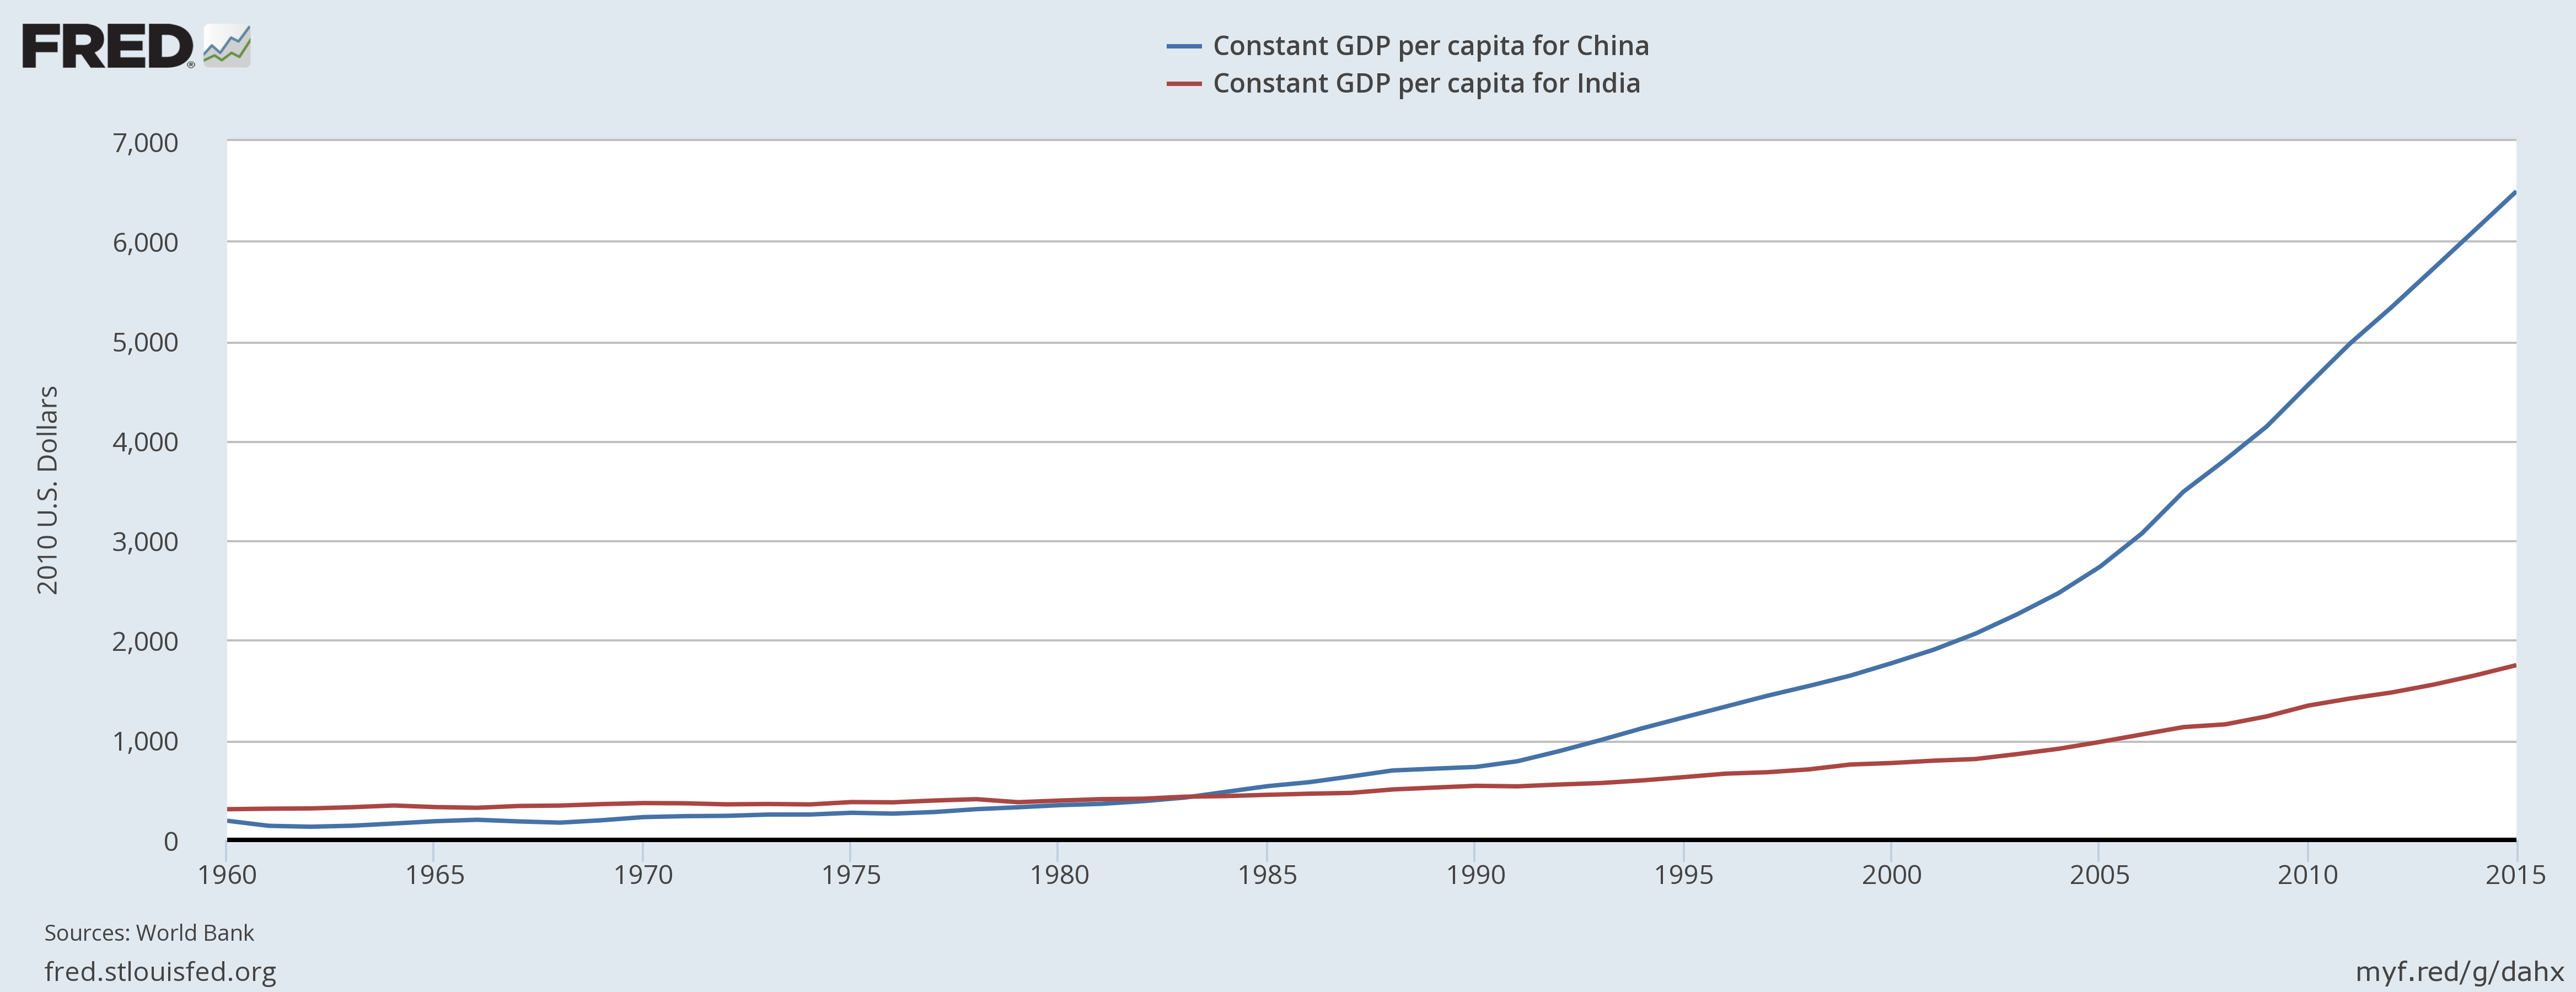 China grows faster than India